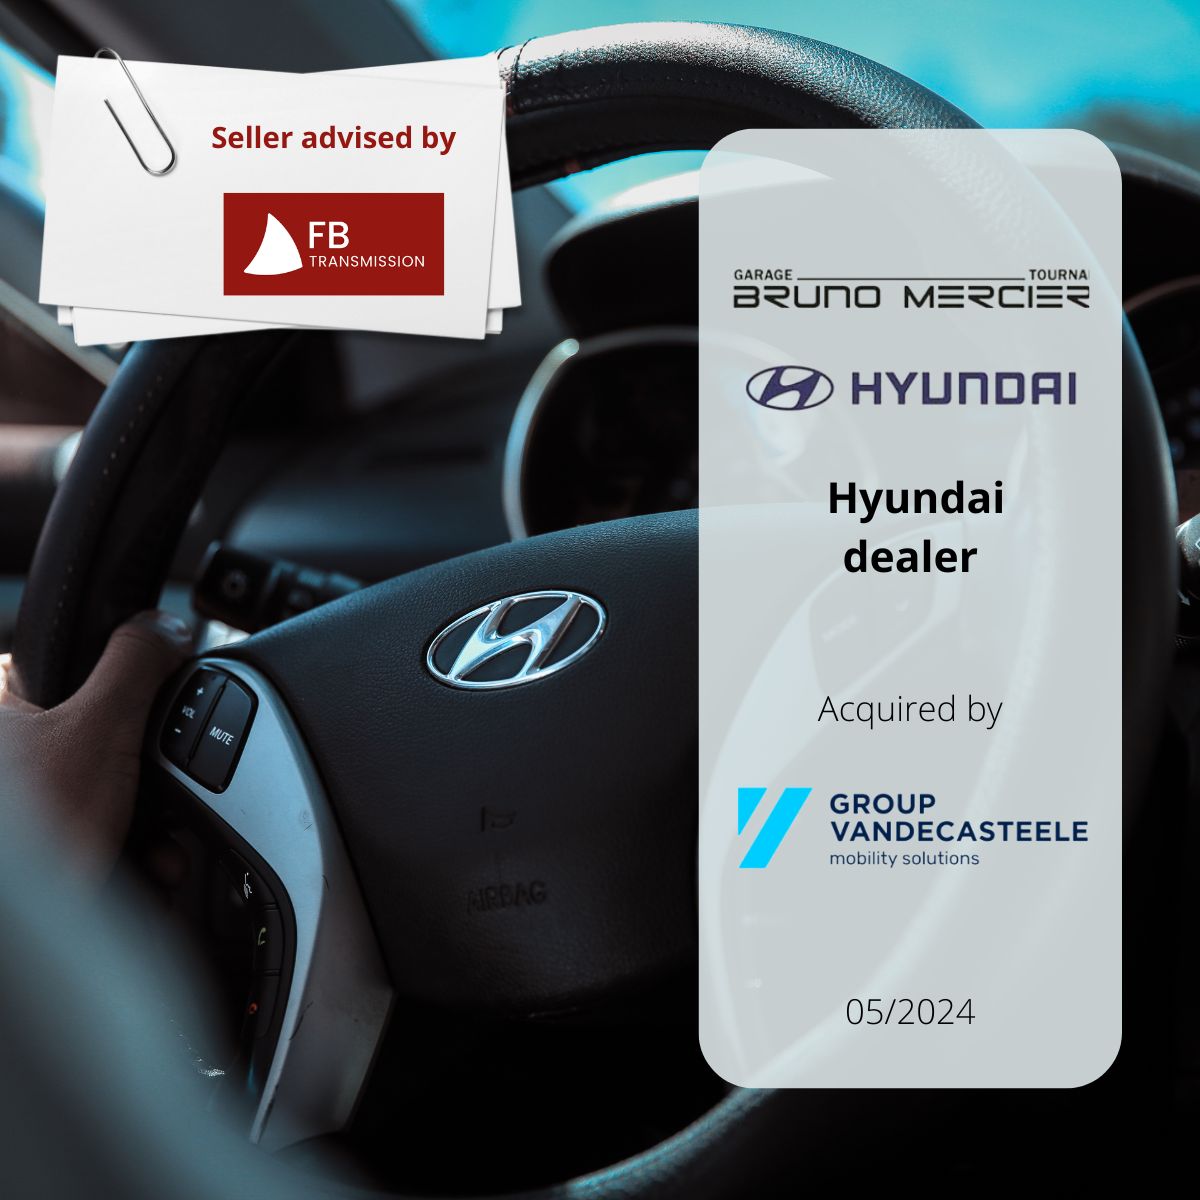 Done deal – Garage Bruno Mercier – Hyundai-dealer